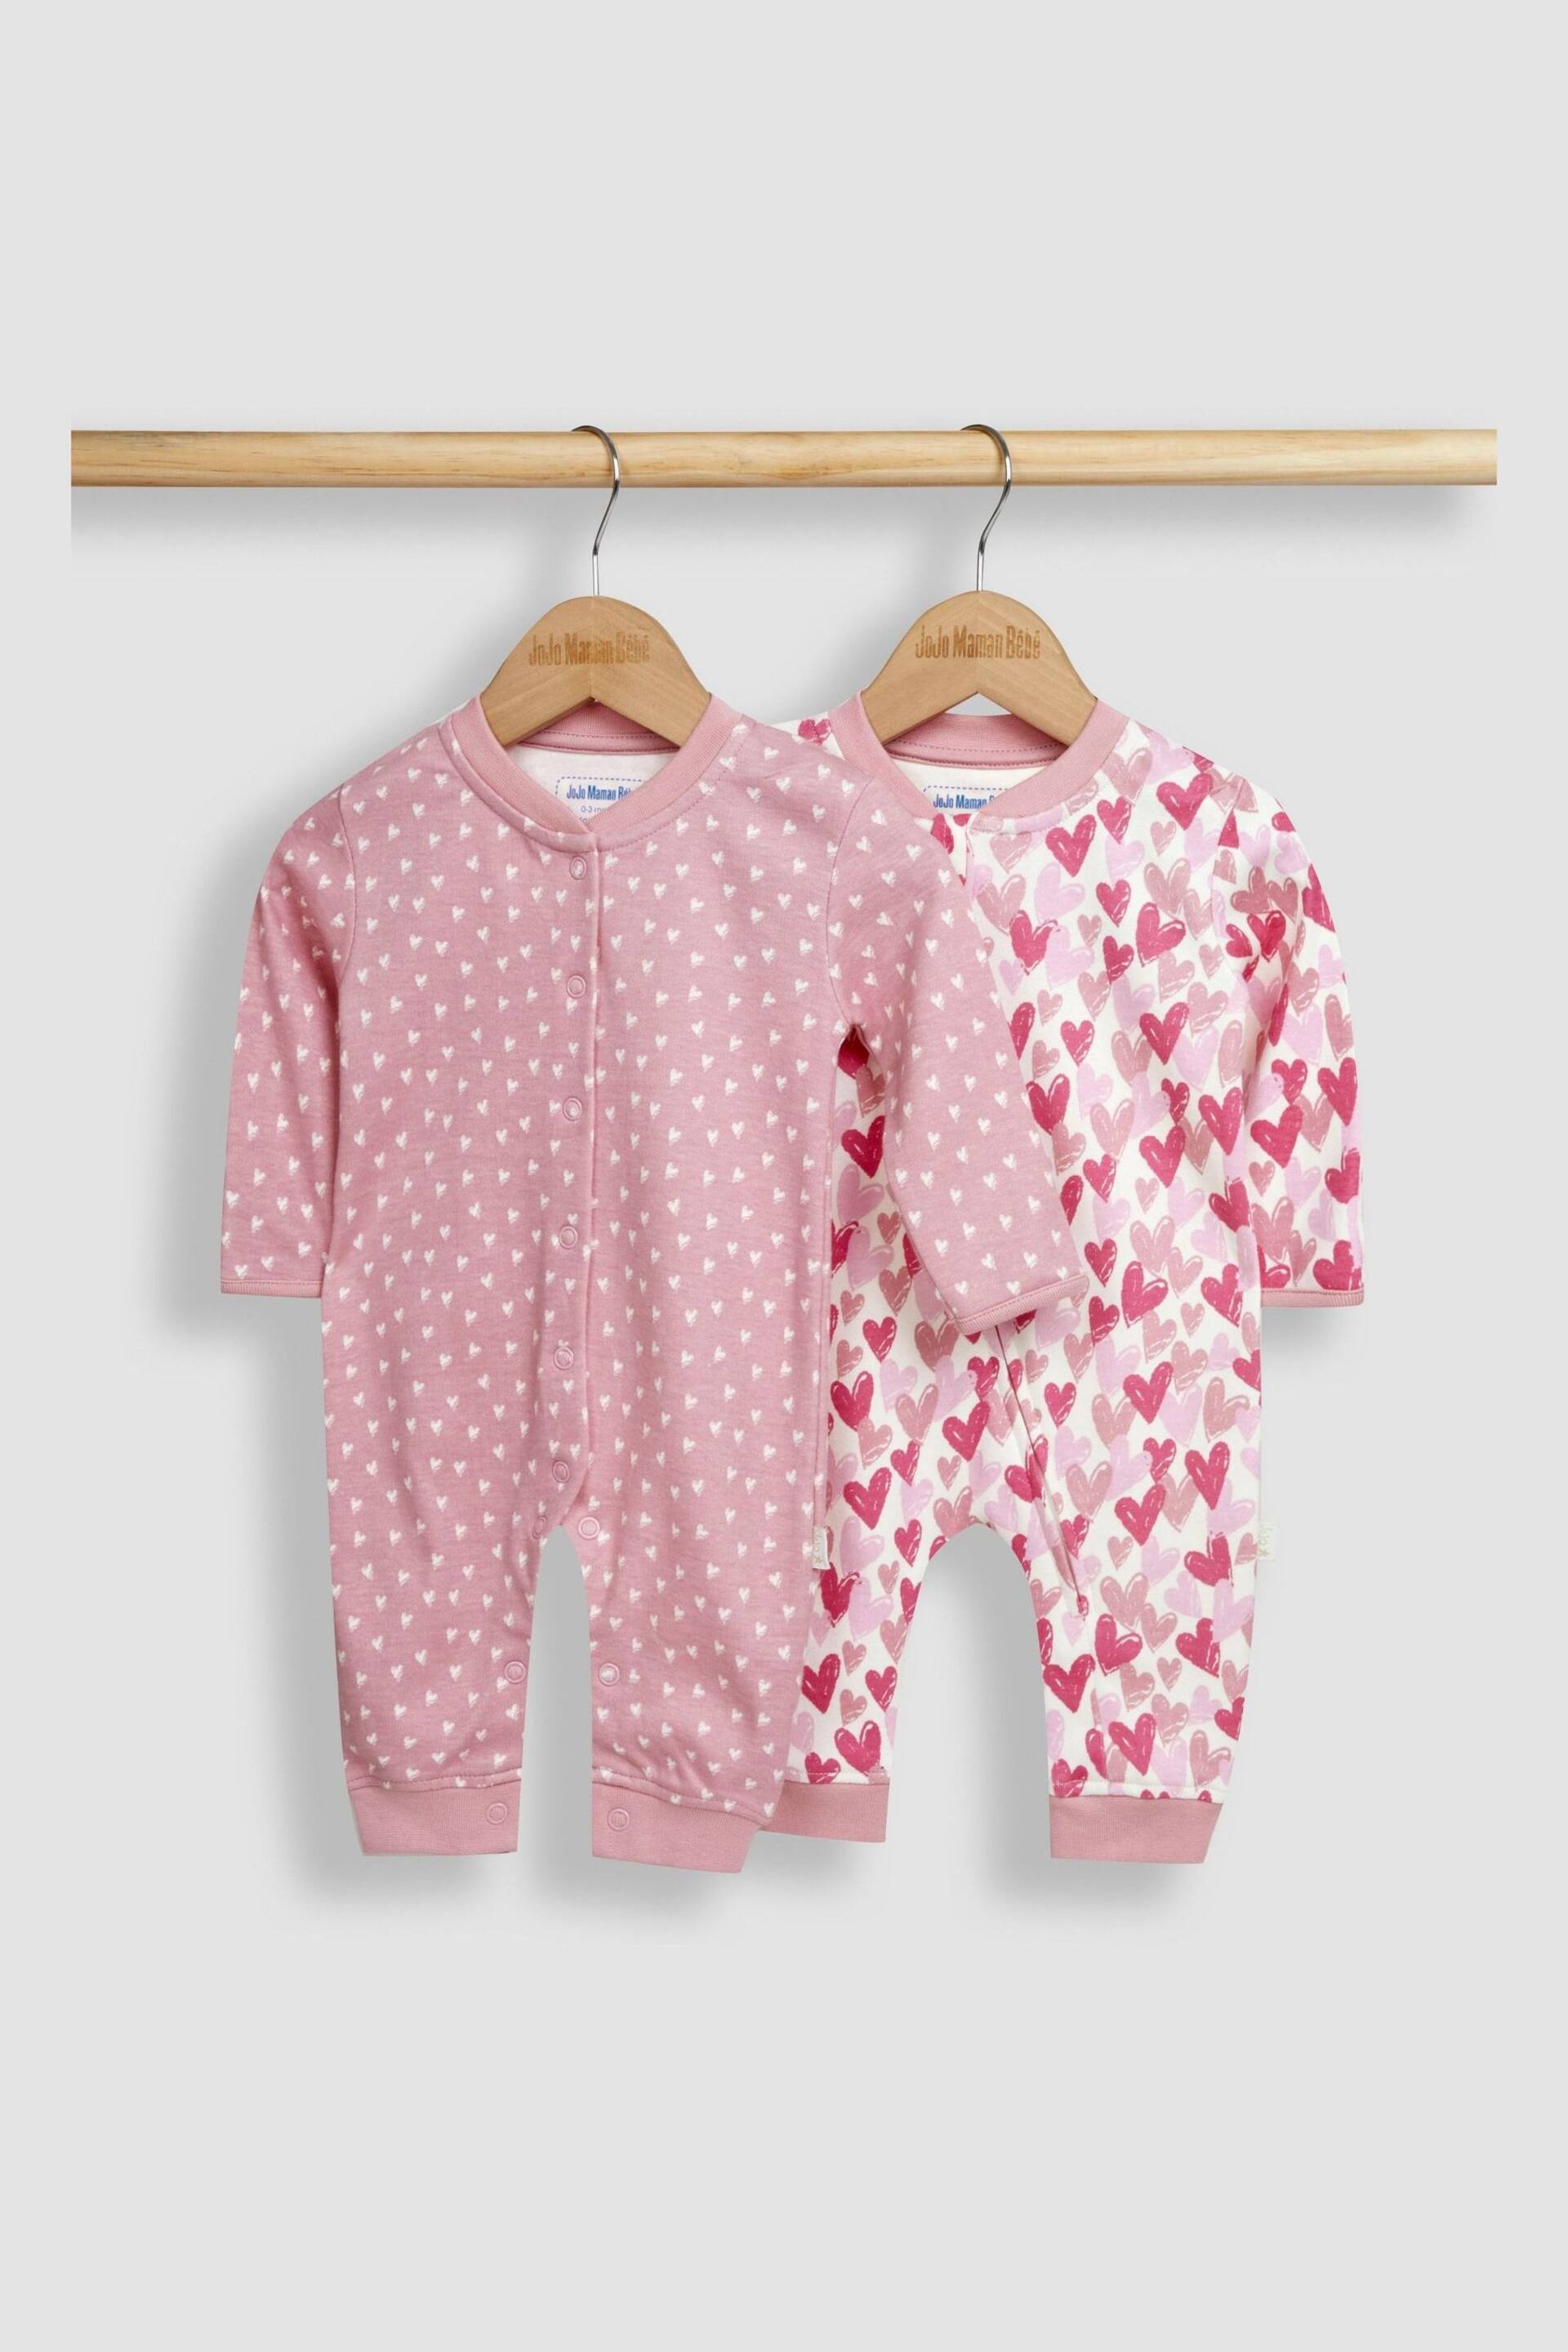 JoJo Maman Bébé Pink Heart 2-Pack Footless Sleepsuits - Image 1 of 5